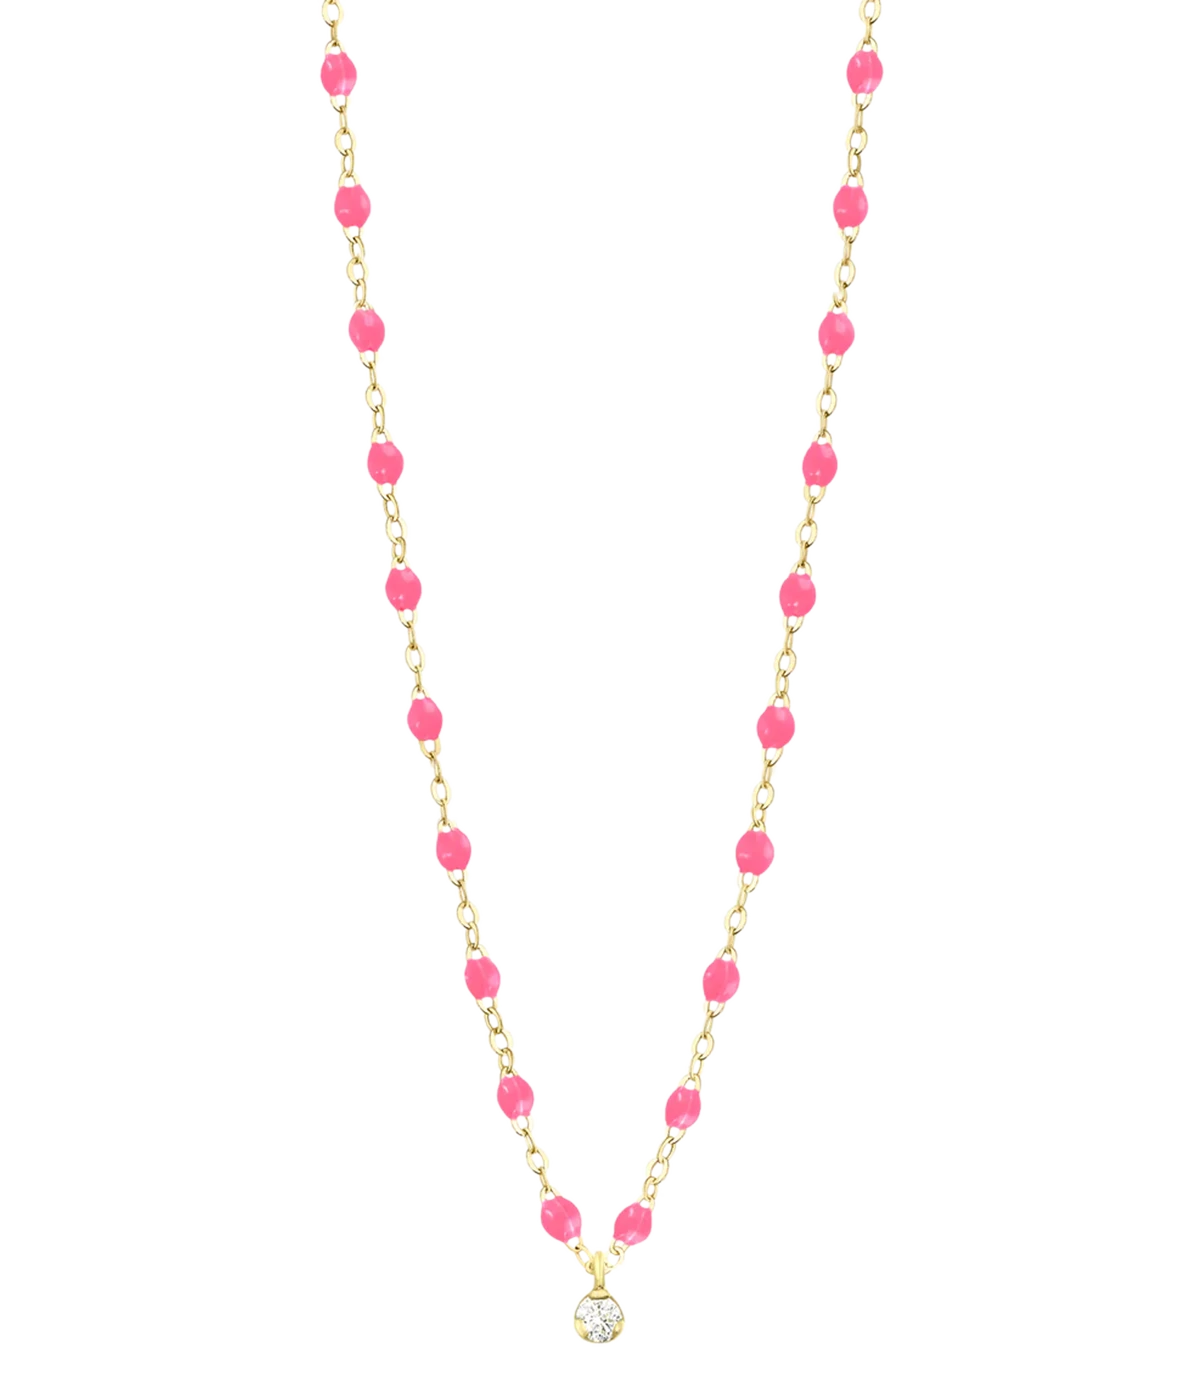 Gigi Supreme 45cm Diamond Necklace in 18K Yellow Gold & Pink